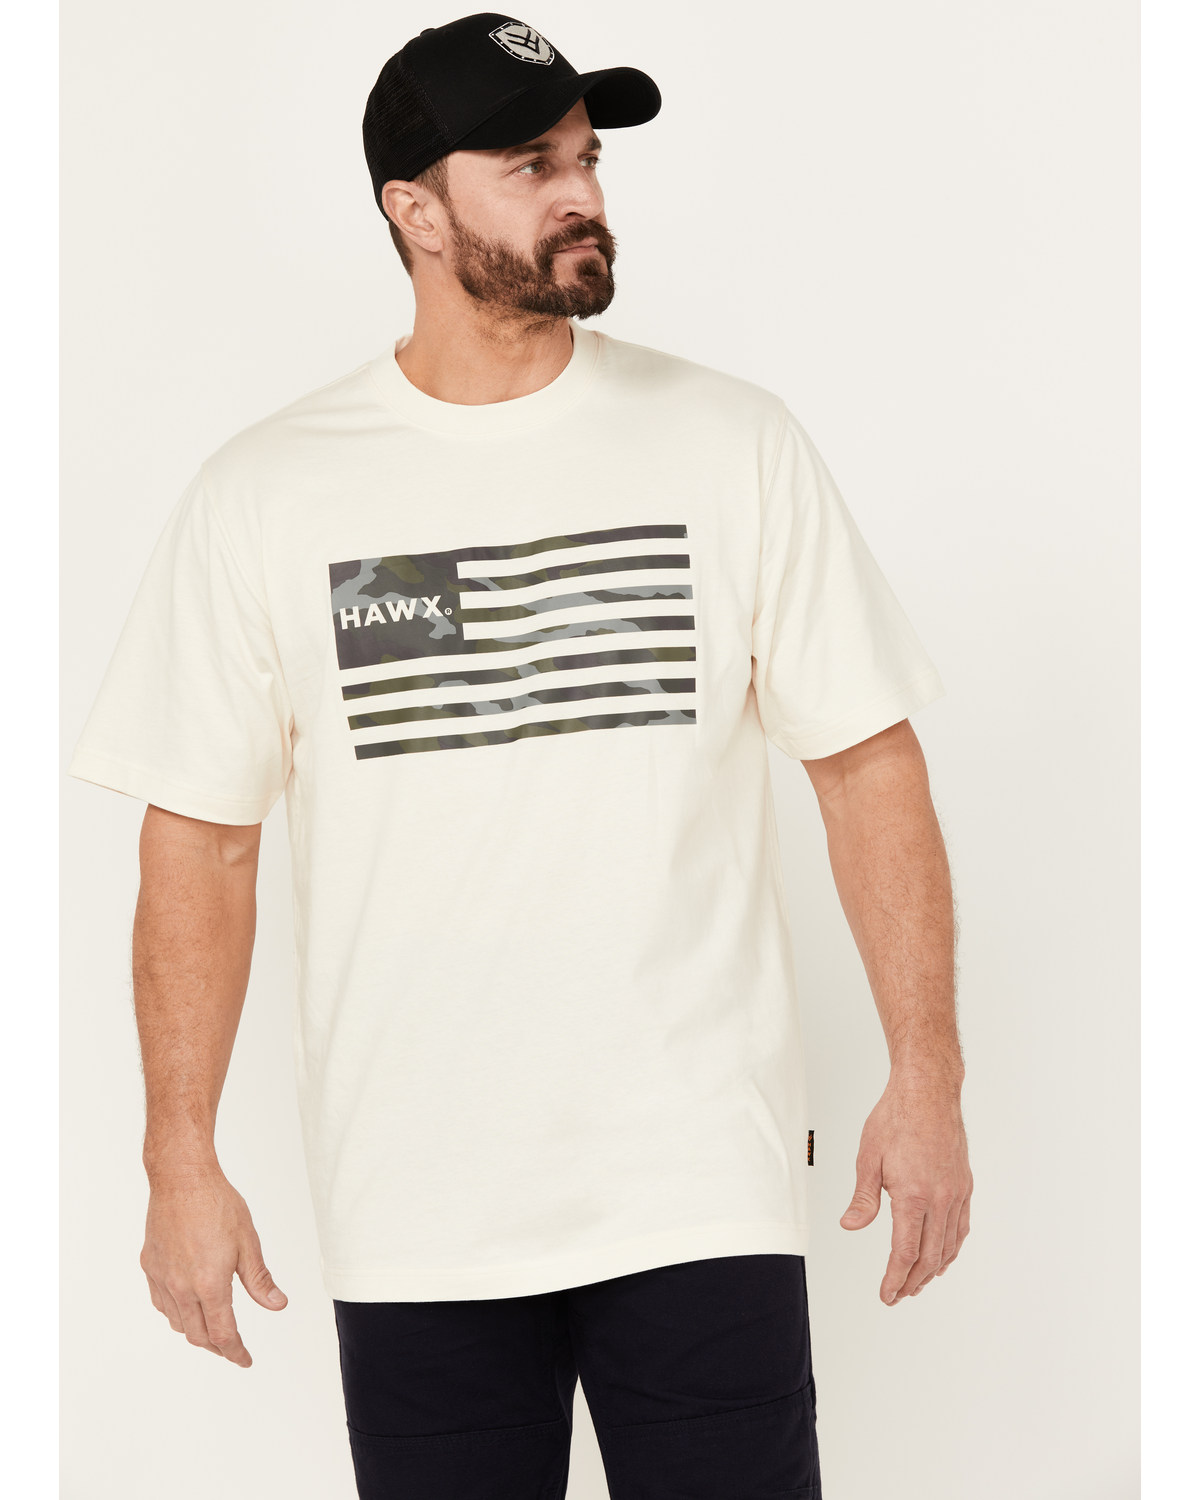 Hawx Men's Camo Flag Short Sleeve Graphic Work T-Shirt